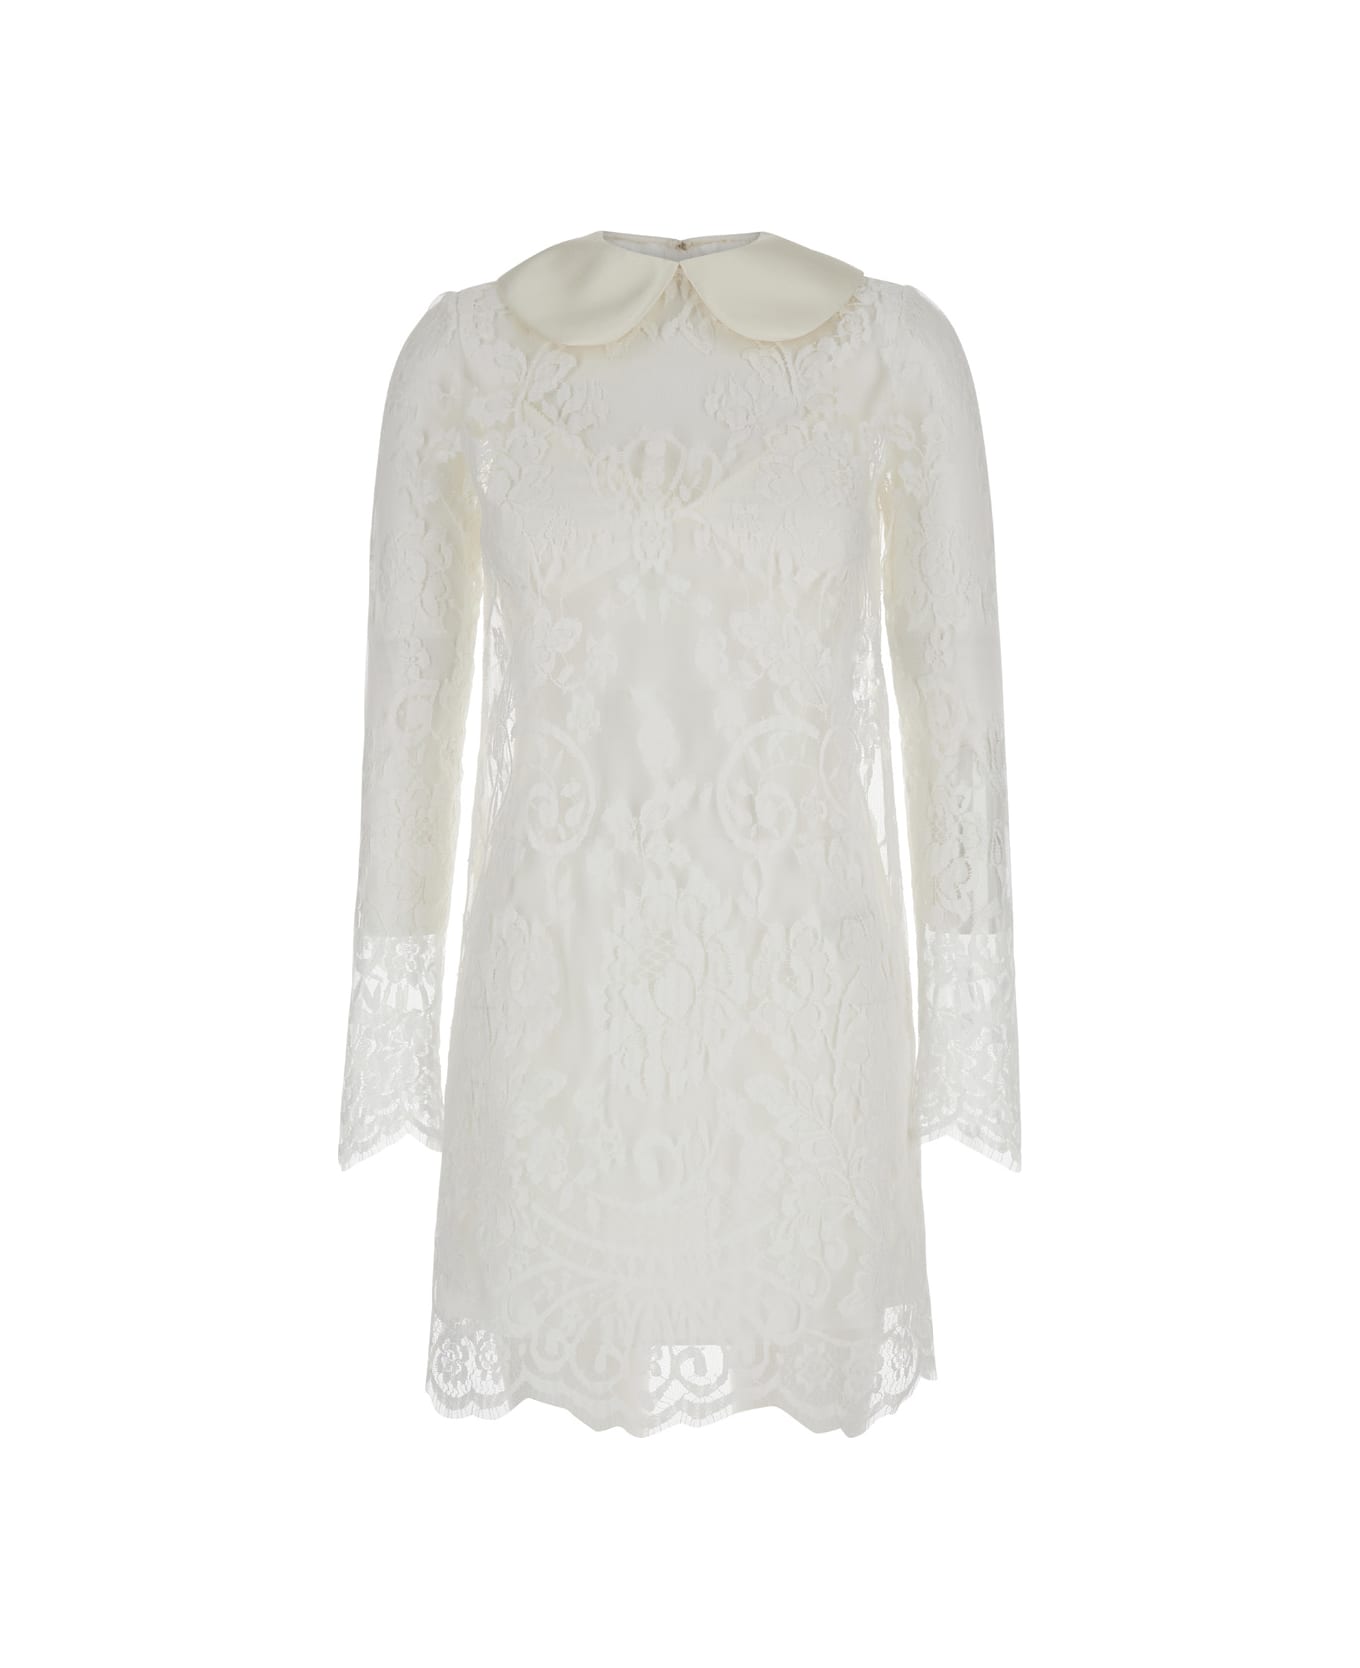 Dolce & Gabbana White Minidress In Chantilly Lace Woman - White